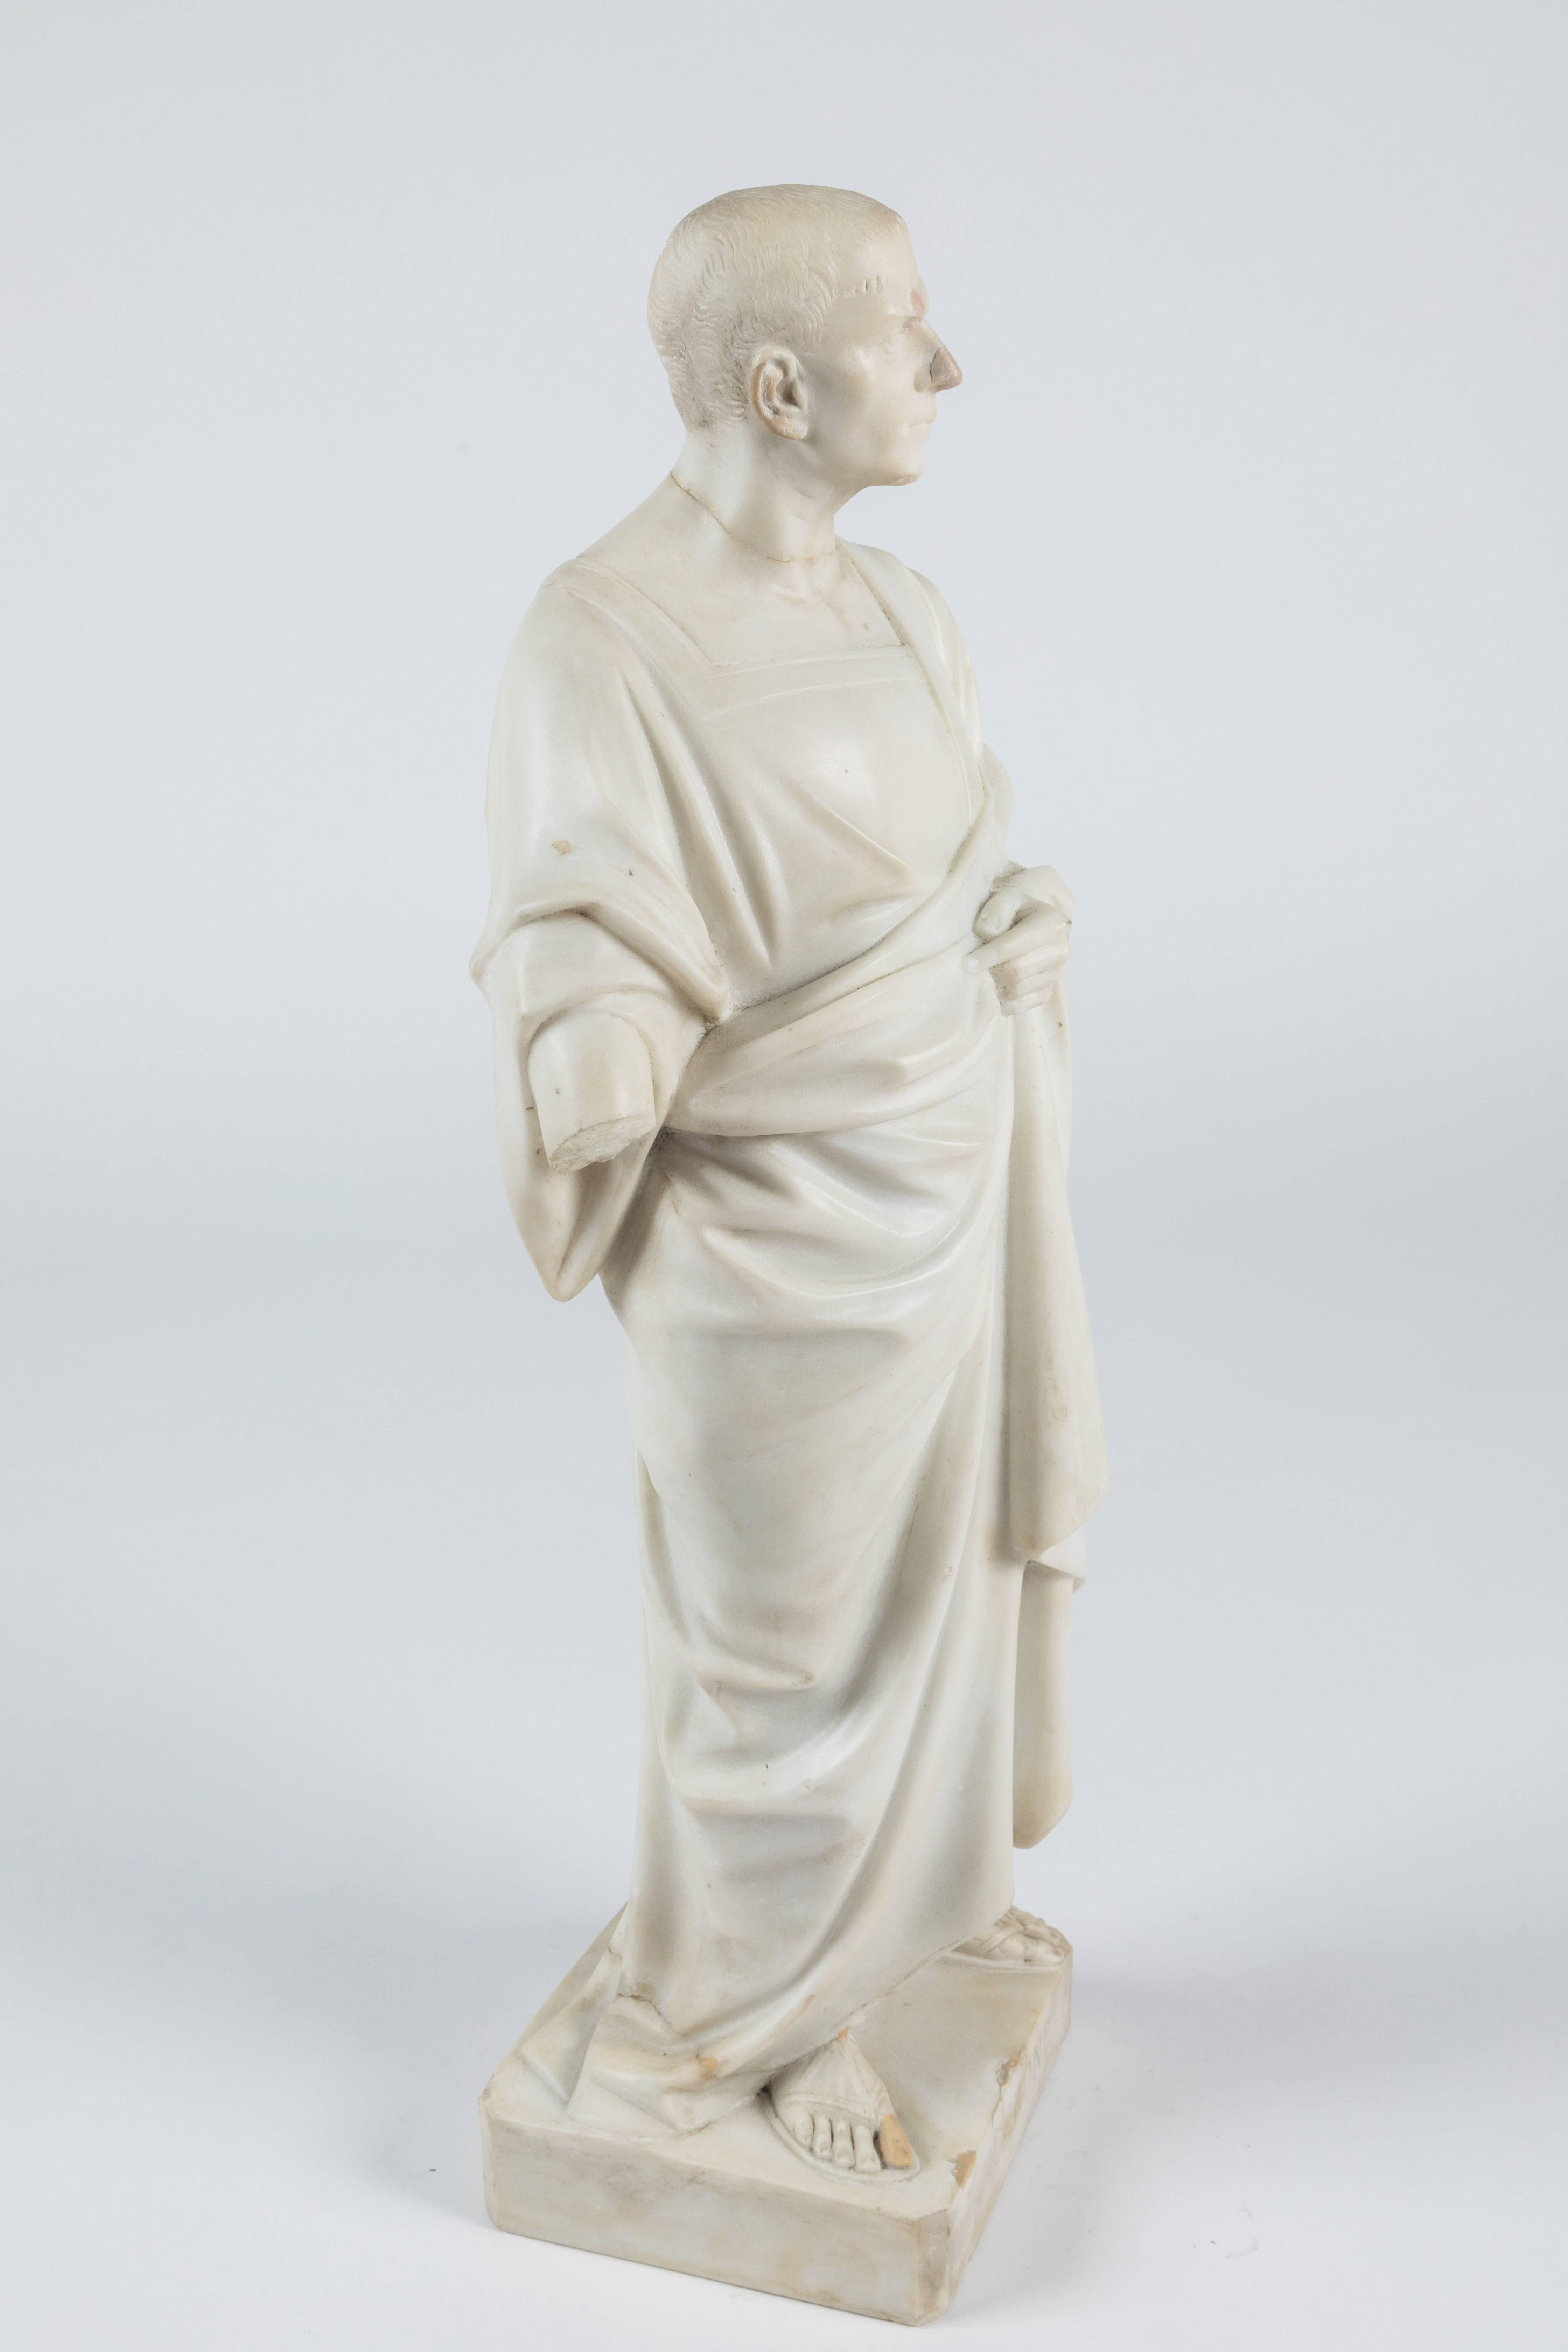 Italian Marble Statue of a Robed Roman Figure